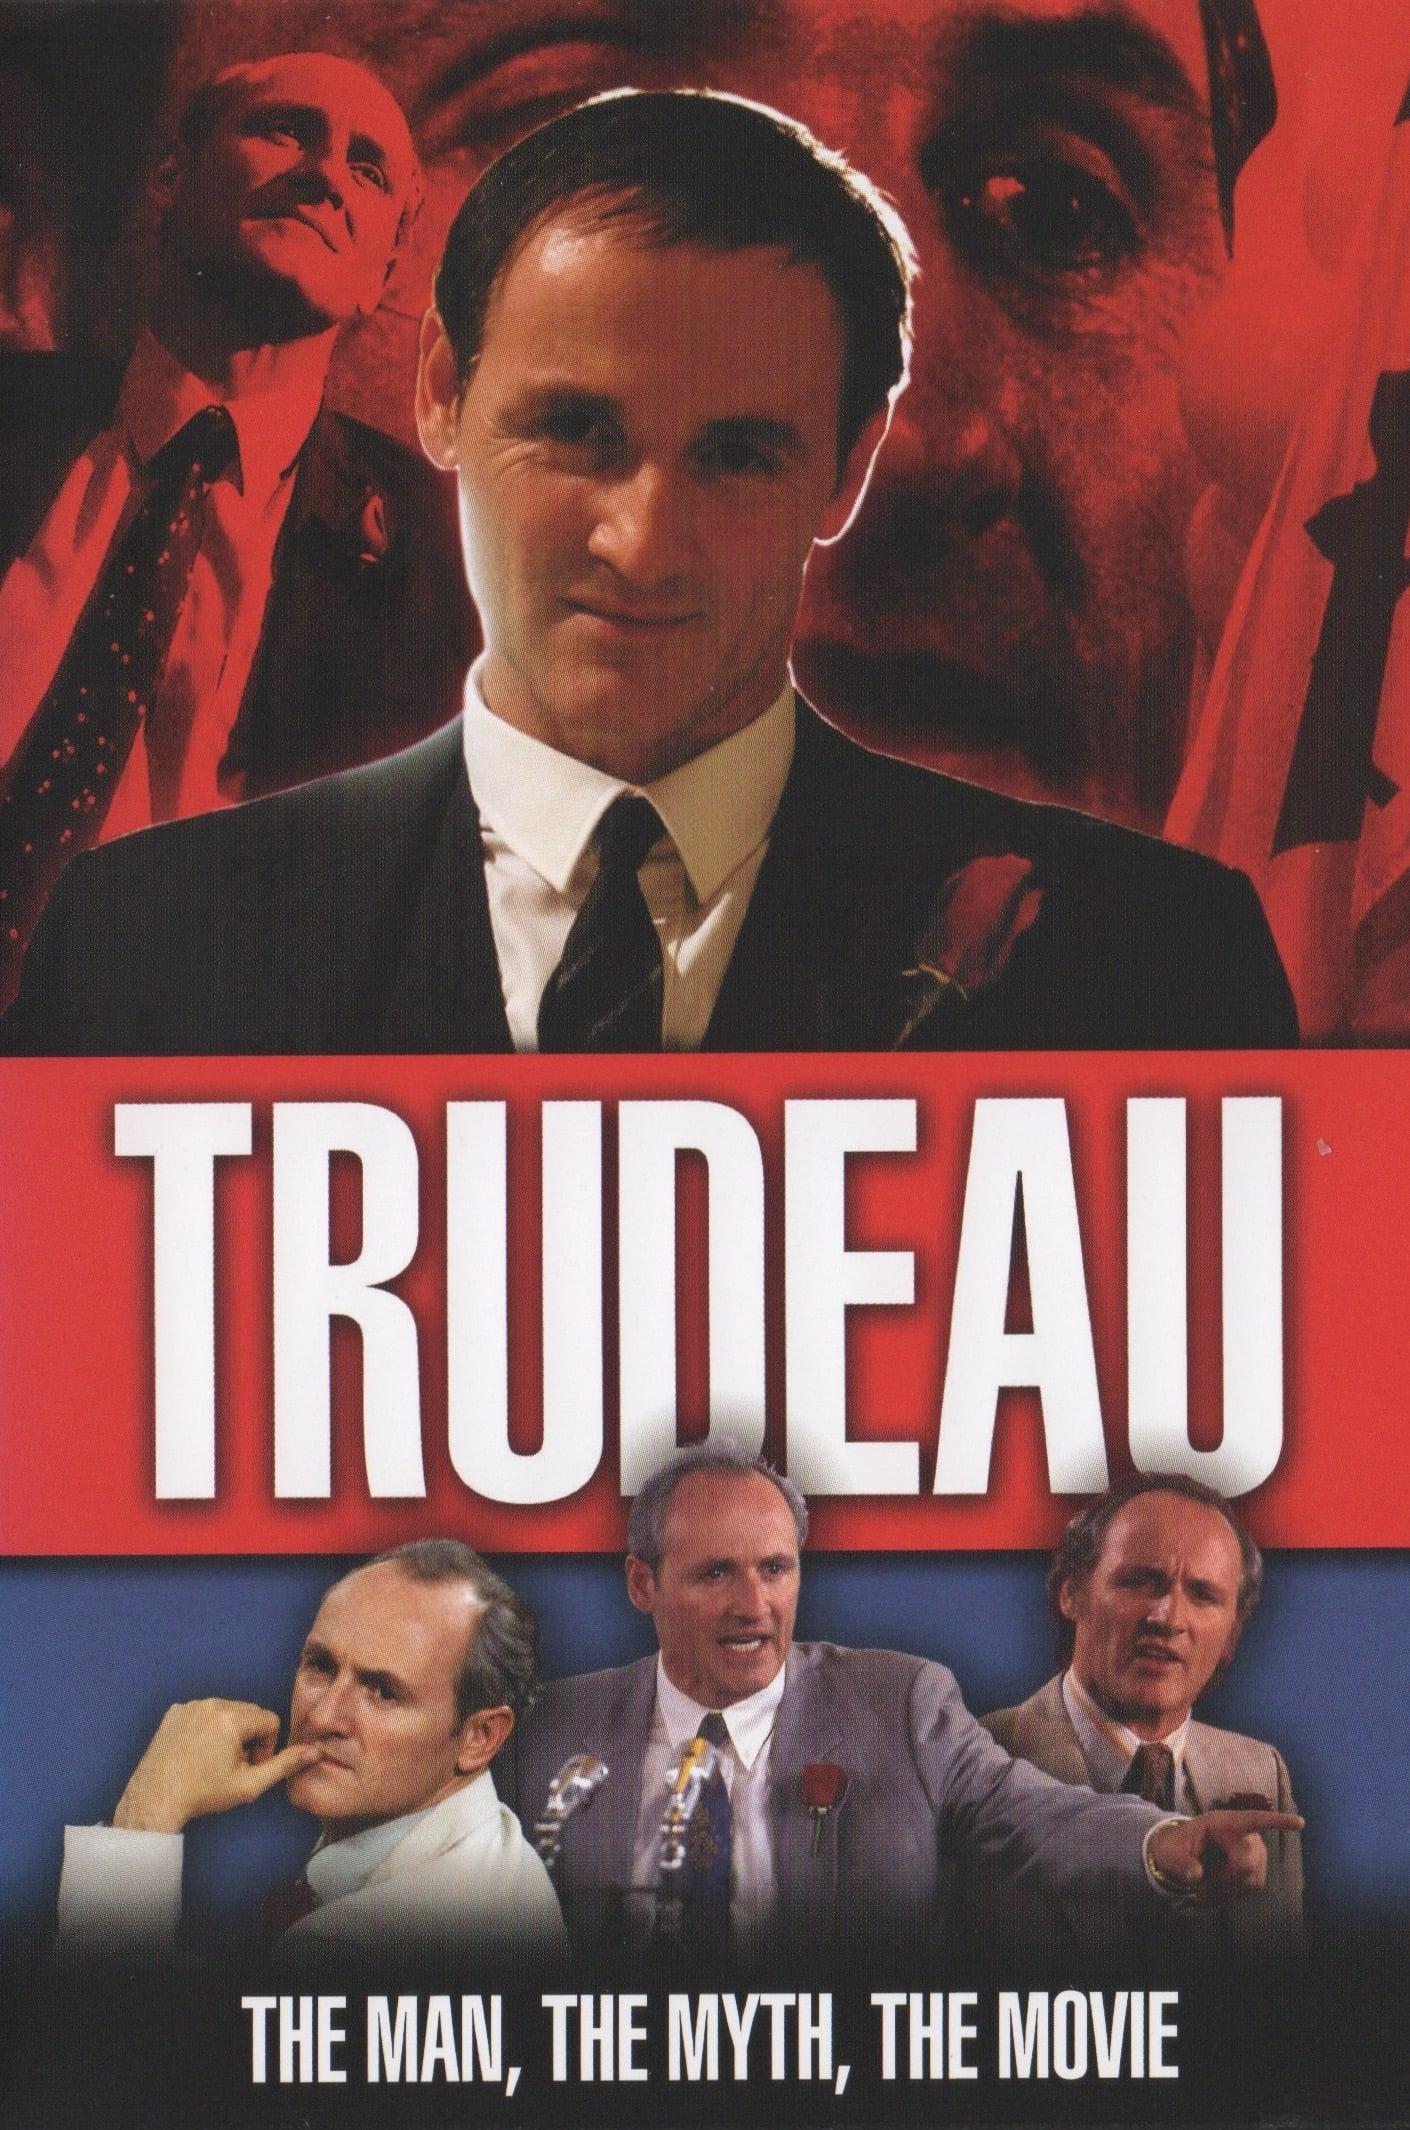 Trudeau poster